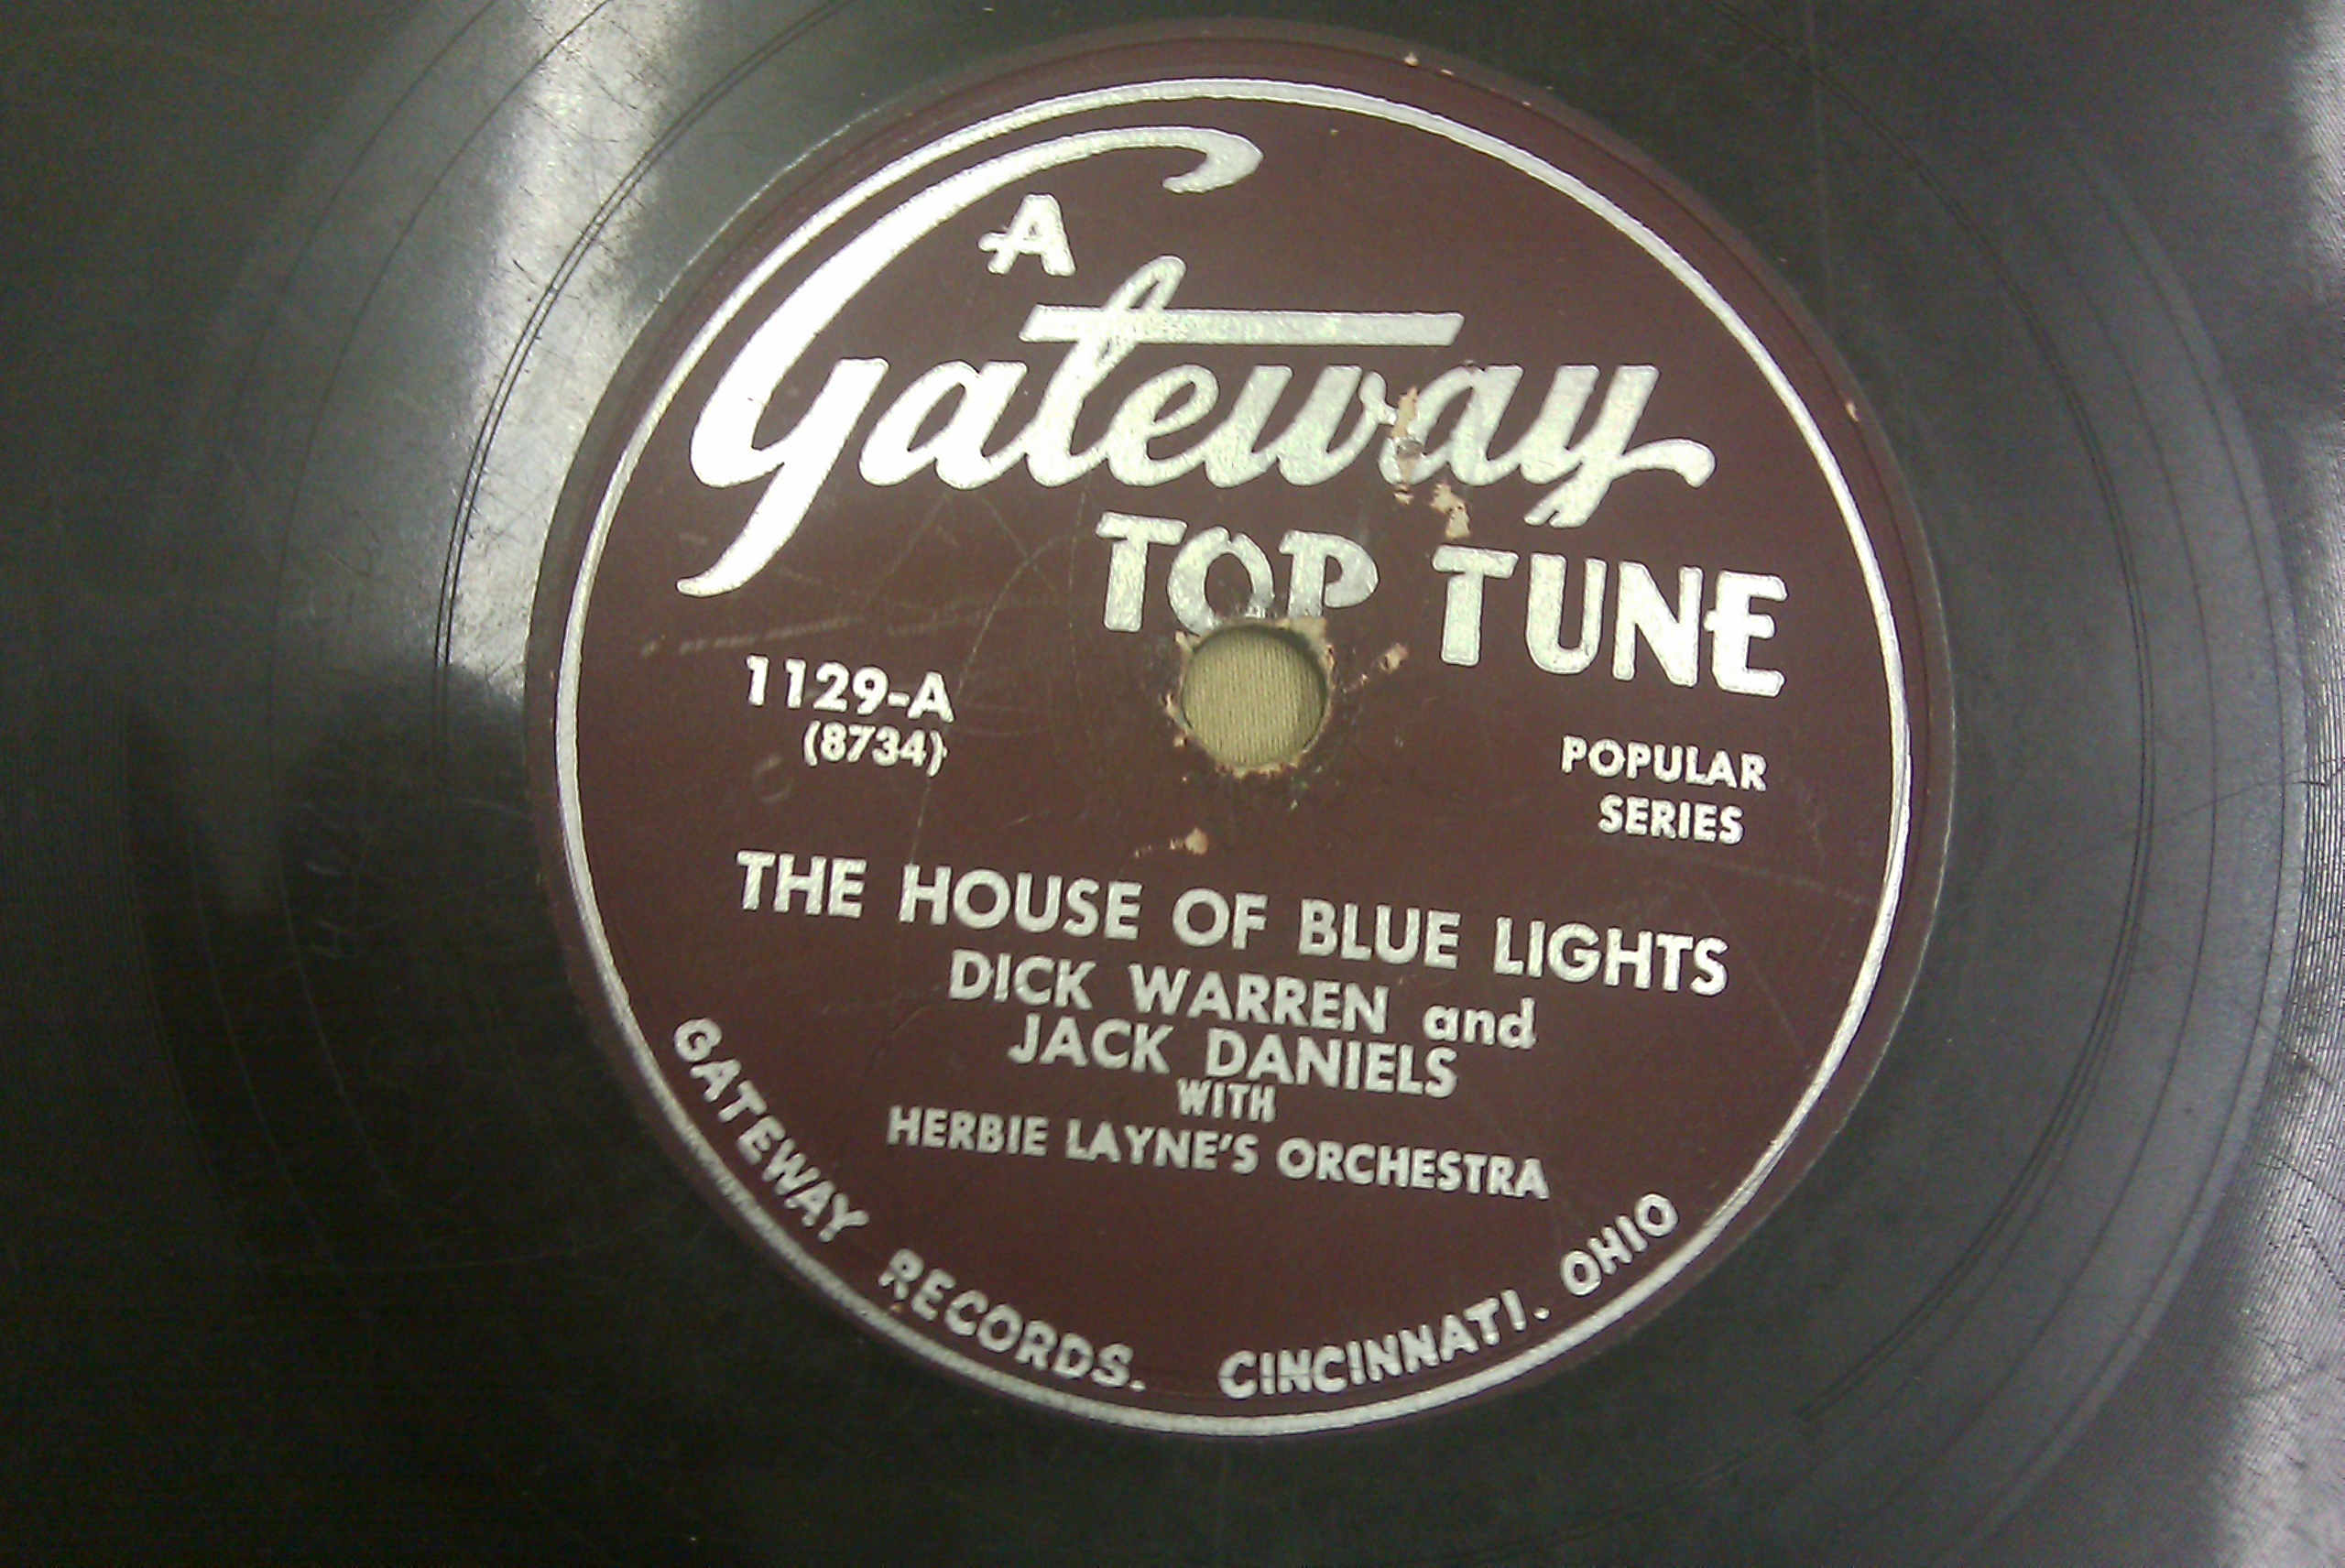 1955 A GATEWAY TOP TUNE 1129-A DICK WARREN & JACK DANIELS - THE HOUSE OF BLUE LIGHTS 1129-B ART ROUSE - AIN’T IT A SHAME